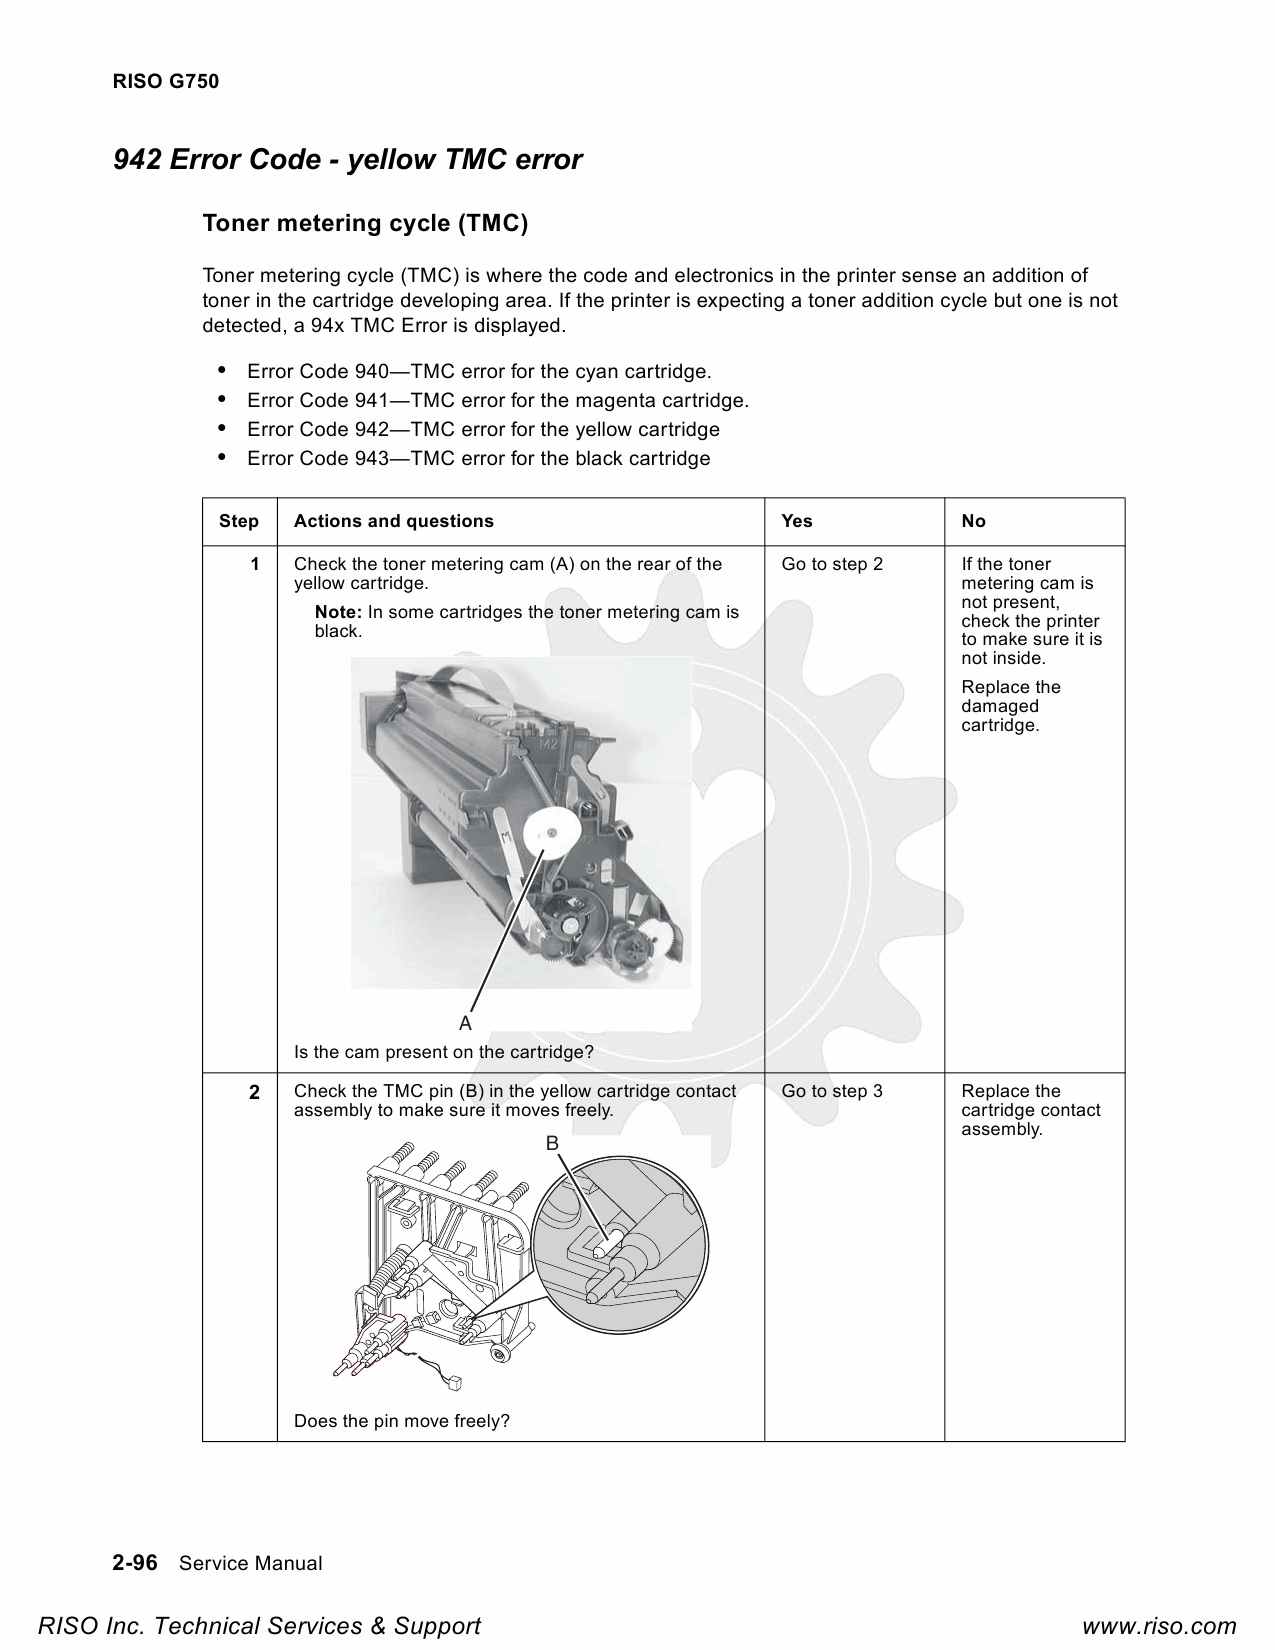 RISO G G750 Service Manual-3